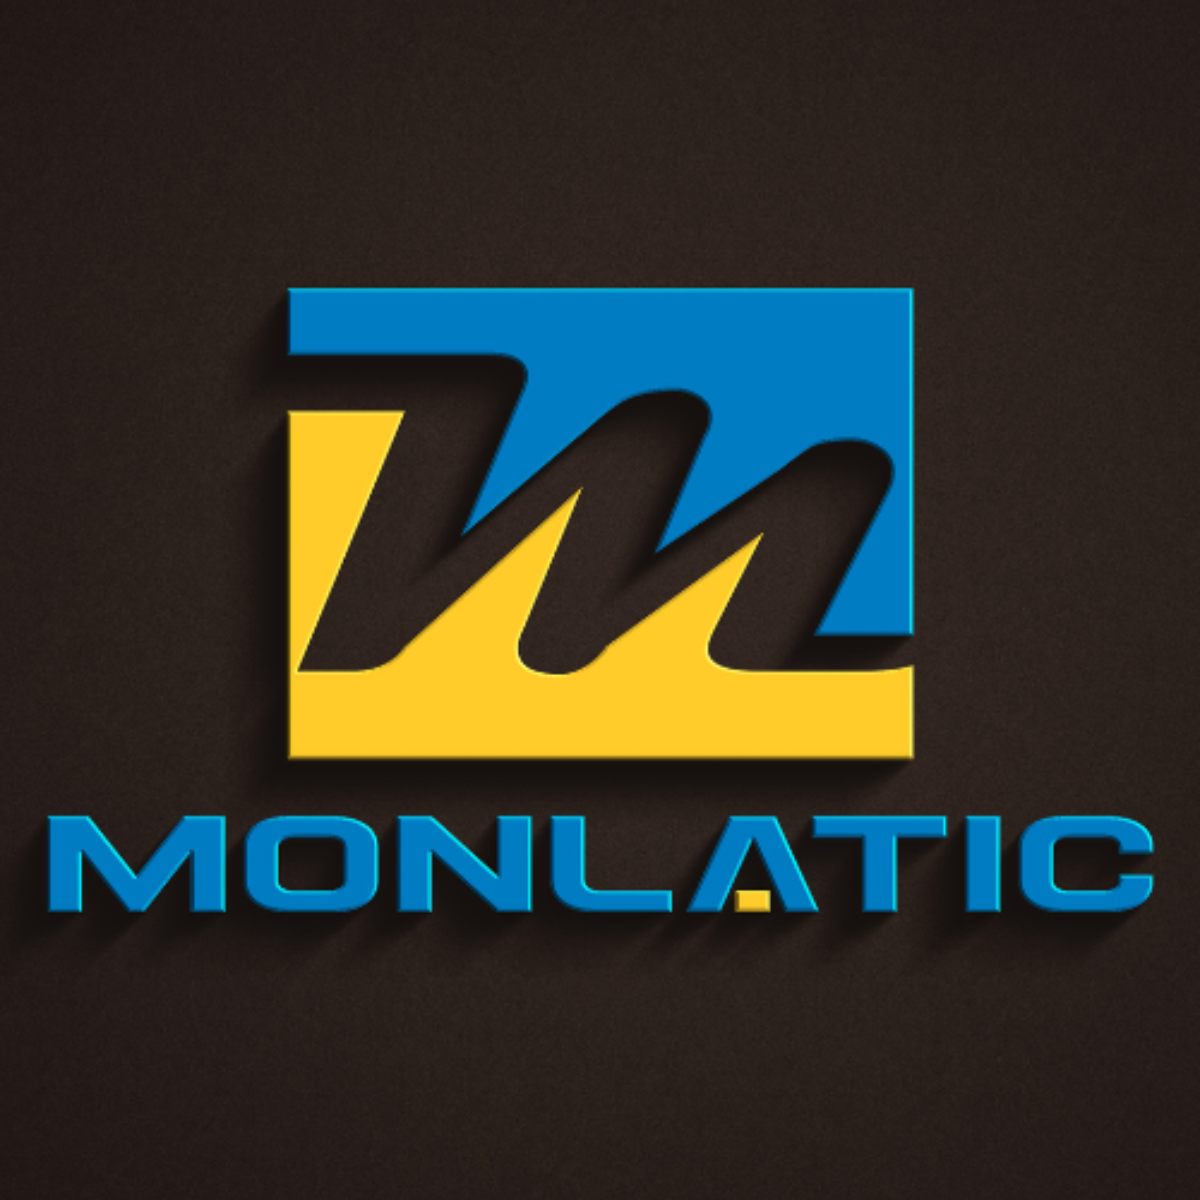 MONLATIC LLC